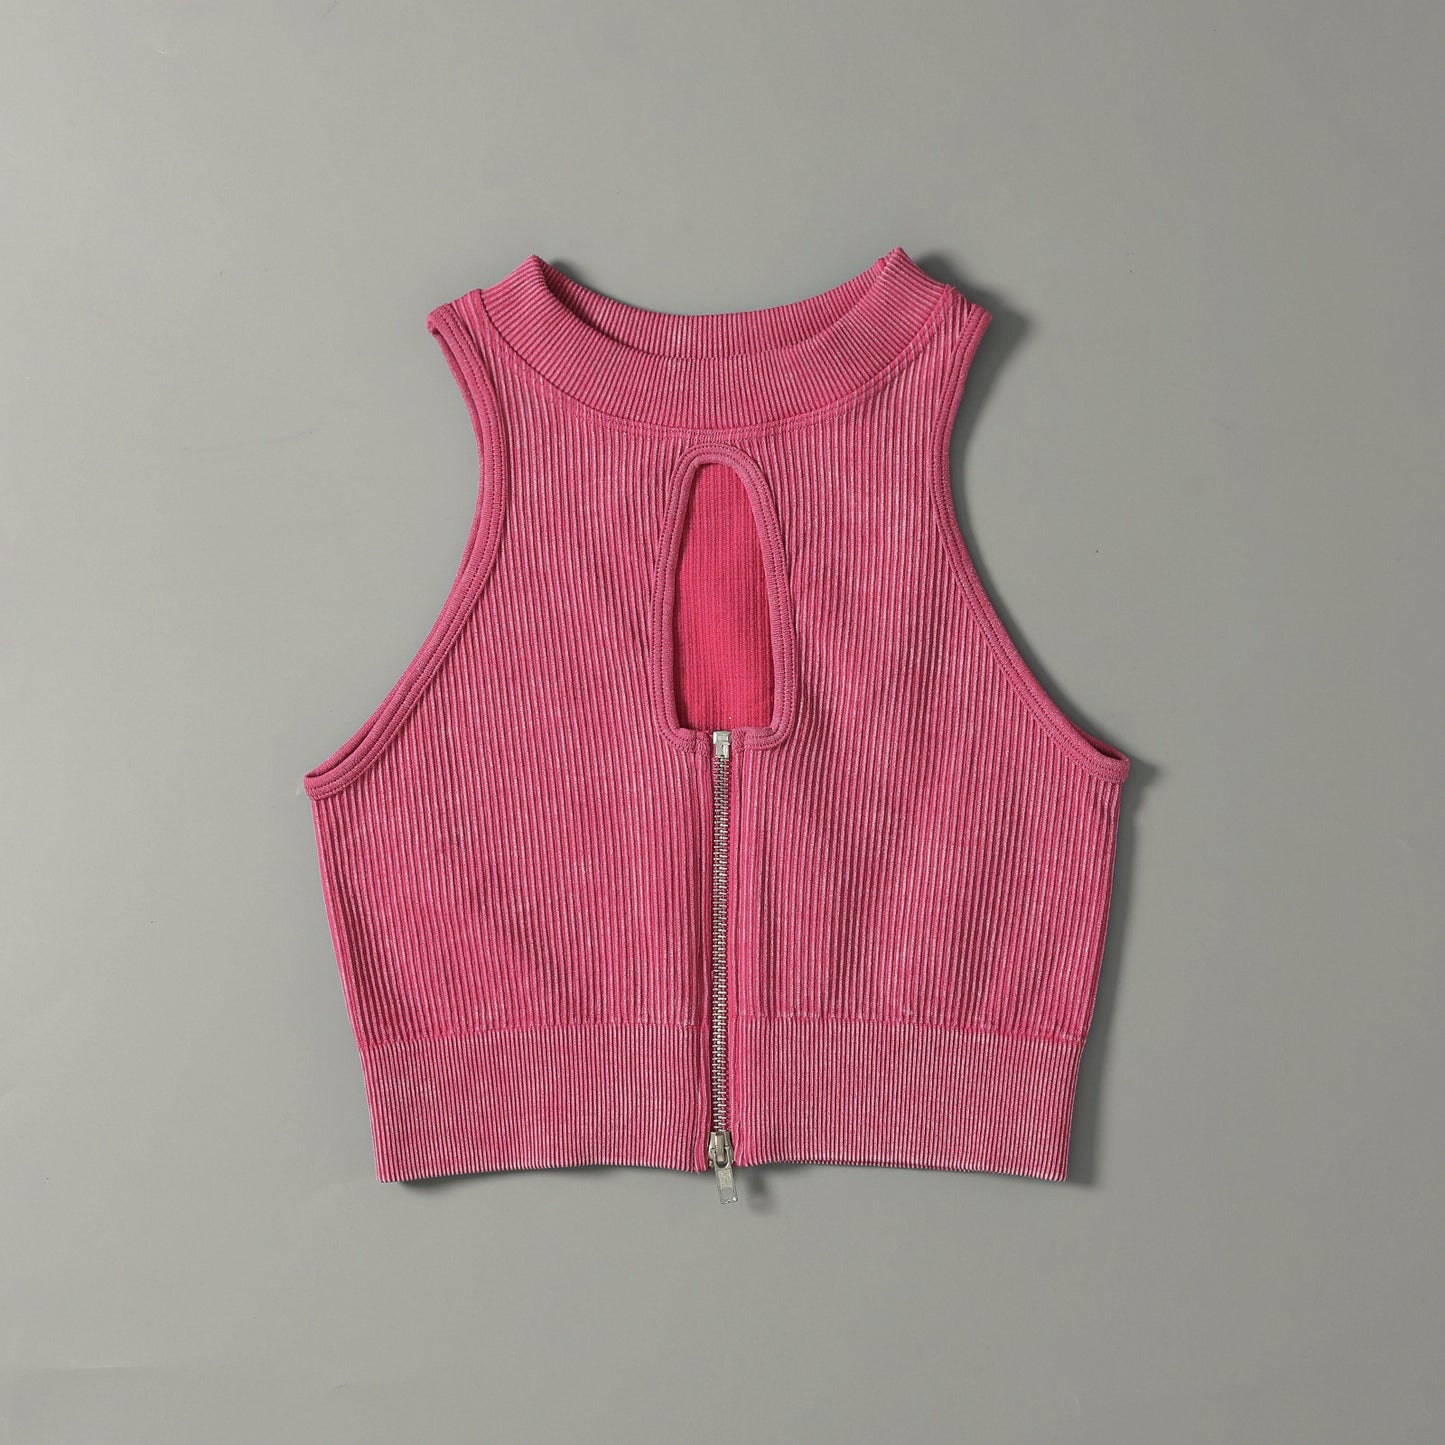 LINK 2 Seamless yoga wear short-sleeved women's sleeveless vest shockproof bra thread sports fitness quick-drying top